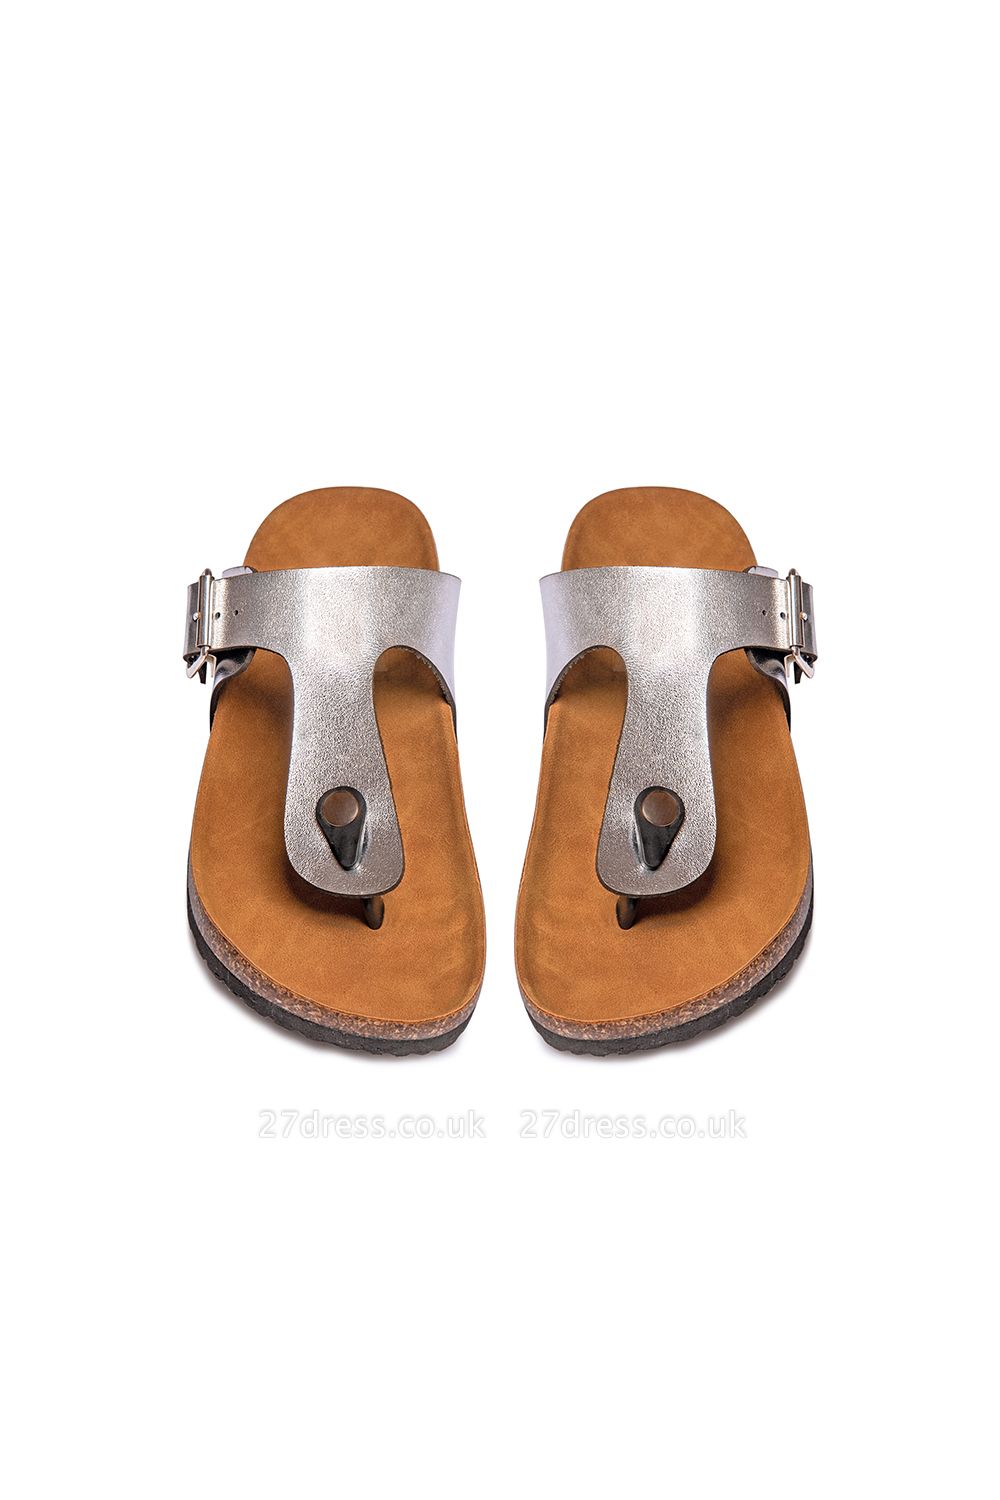 Unisex Essentials EVA Sandals for Women Men Lightweight Beach Slide Slippers Non-Slip